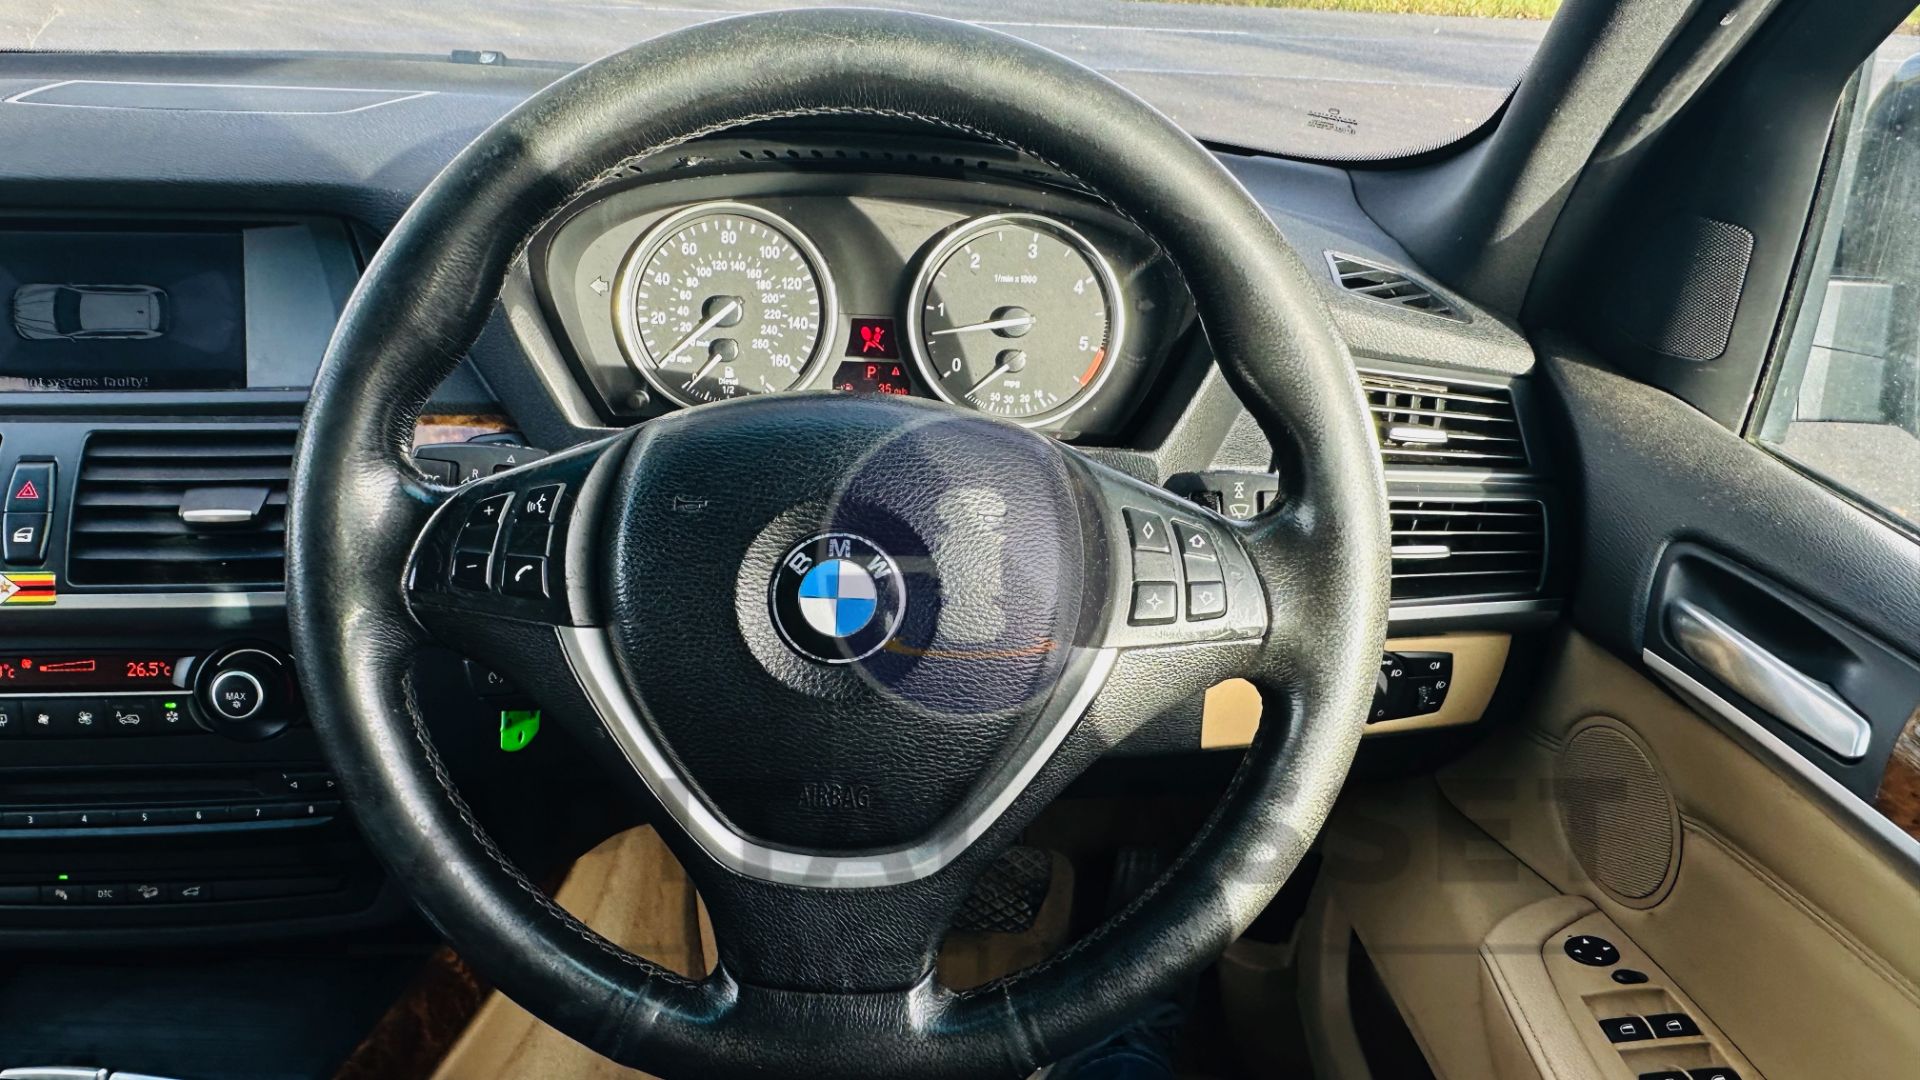 BMW X5 'X-DRIVE 30D' *SPECIAL EDITION* 5 DOOR SUV (2010) 3.0 DIESEL - AUTOMATIC (NO VAT) *HUGE SPEC* - Image 43 of 45